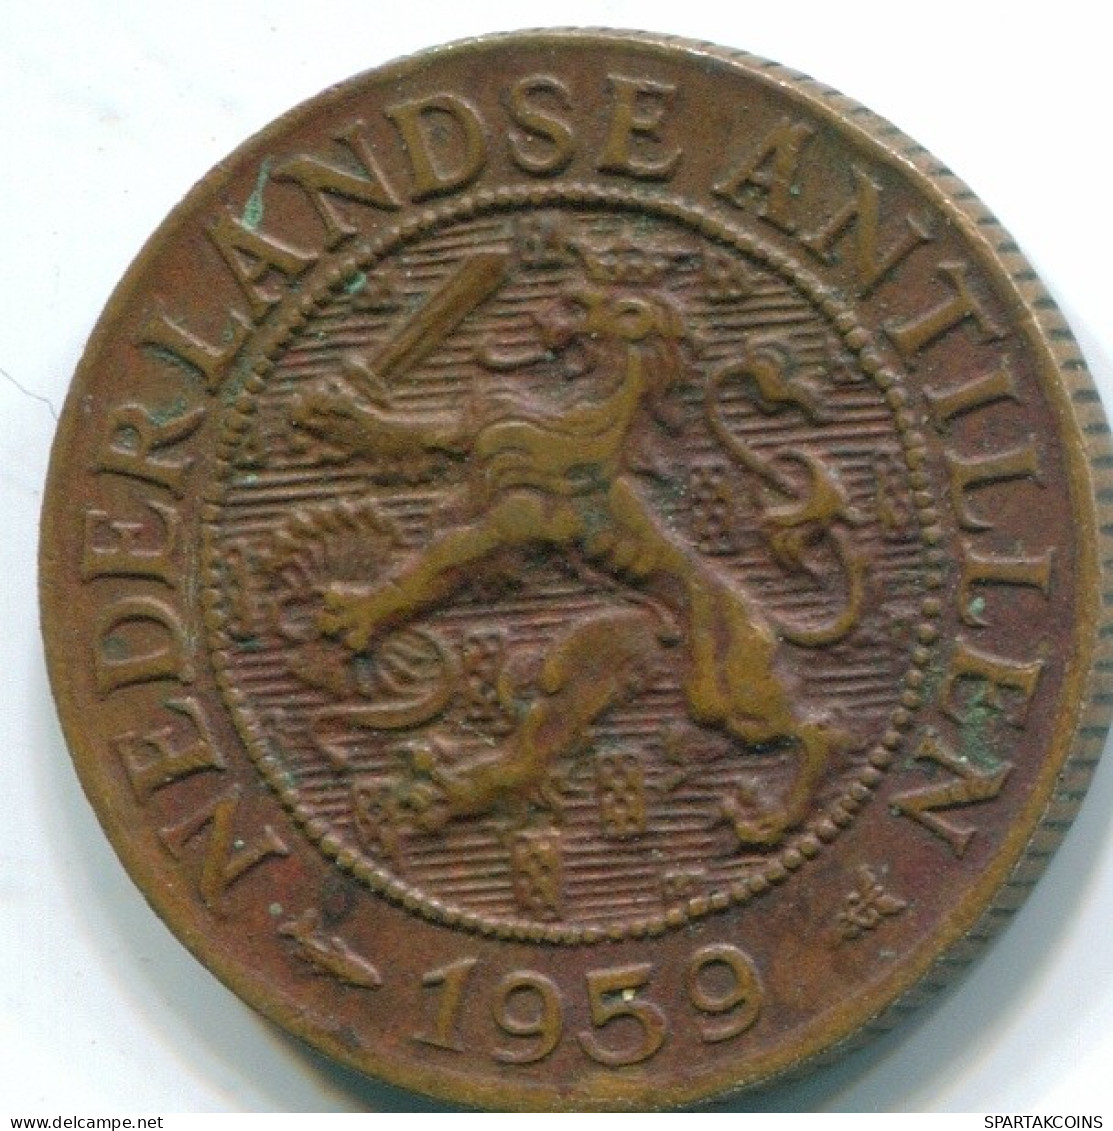 1 CENT 1959 NETHERLANDS ANTILLES Bronze Fish Colonial Coin #S11048.U.A - Netherlands Antilles